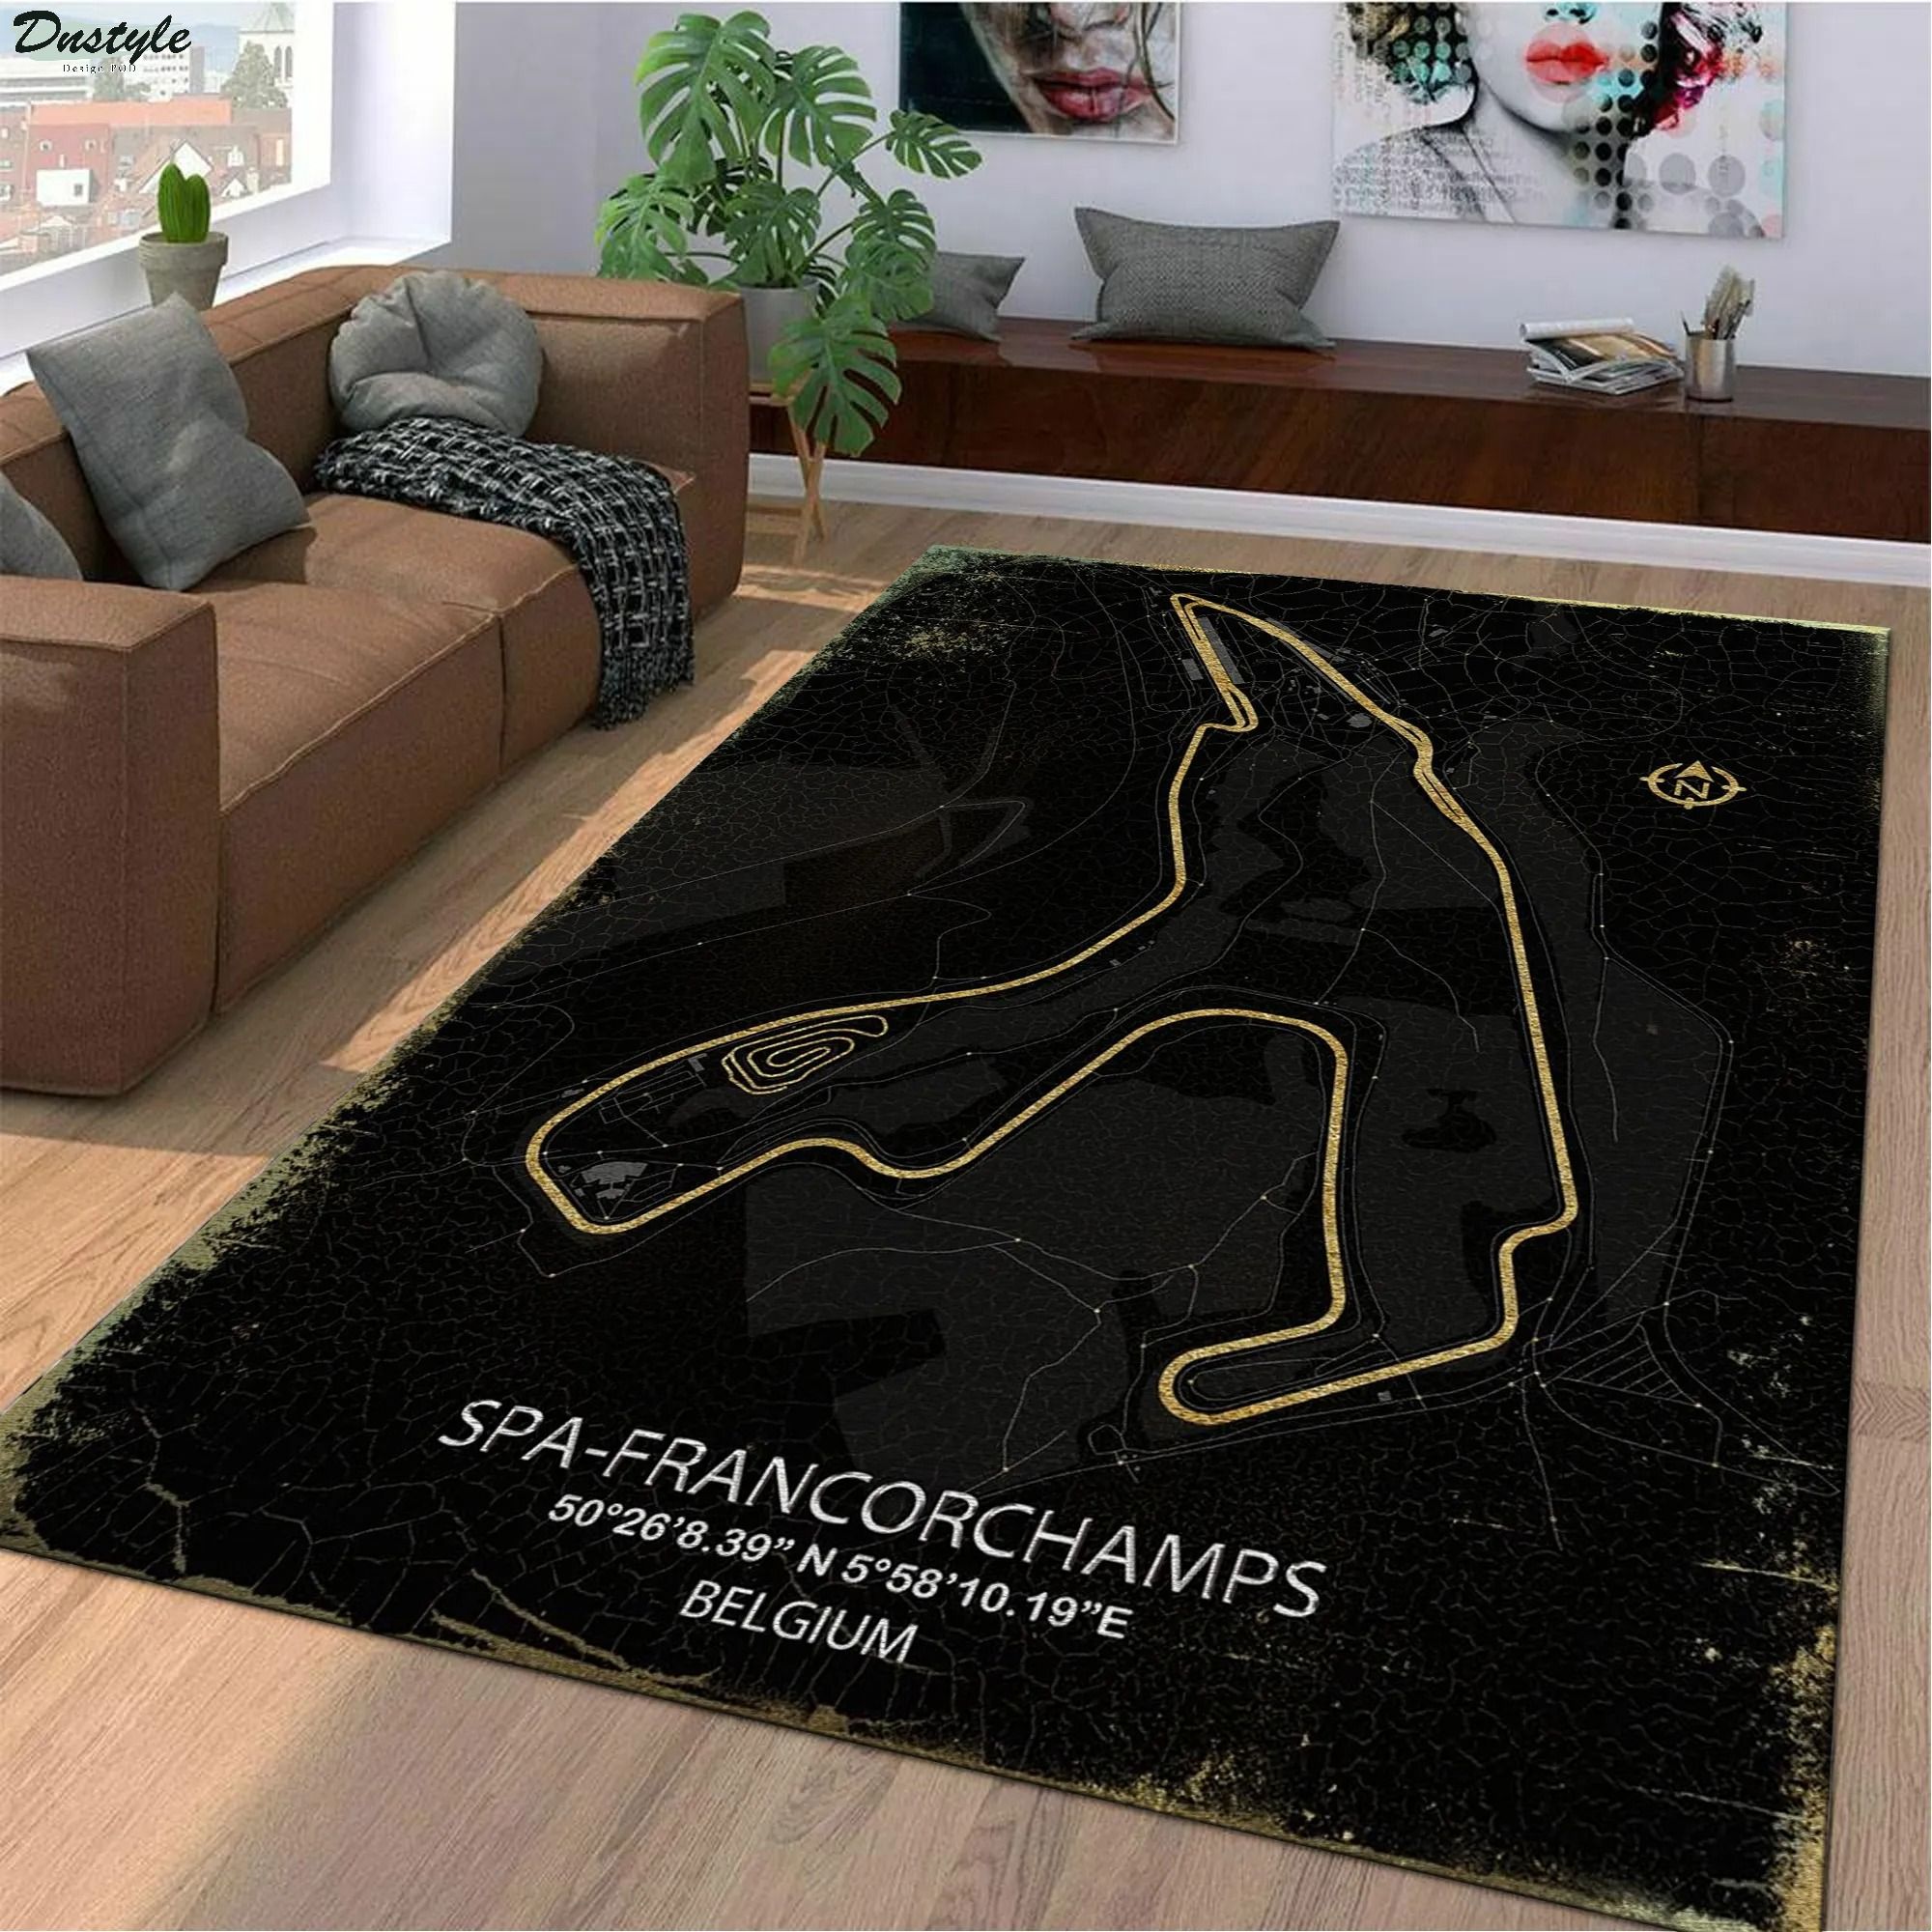 Spa-francorchamps belgium f1 track rug